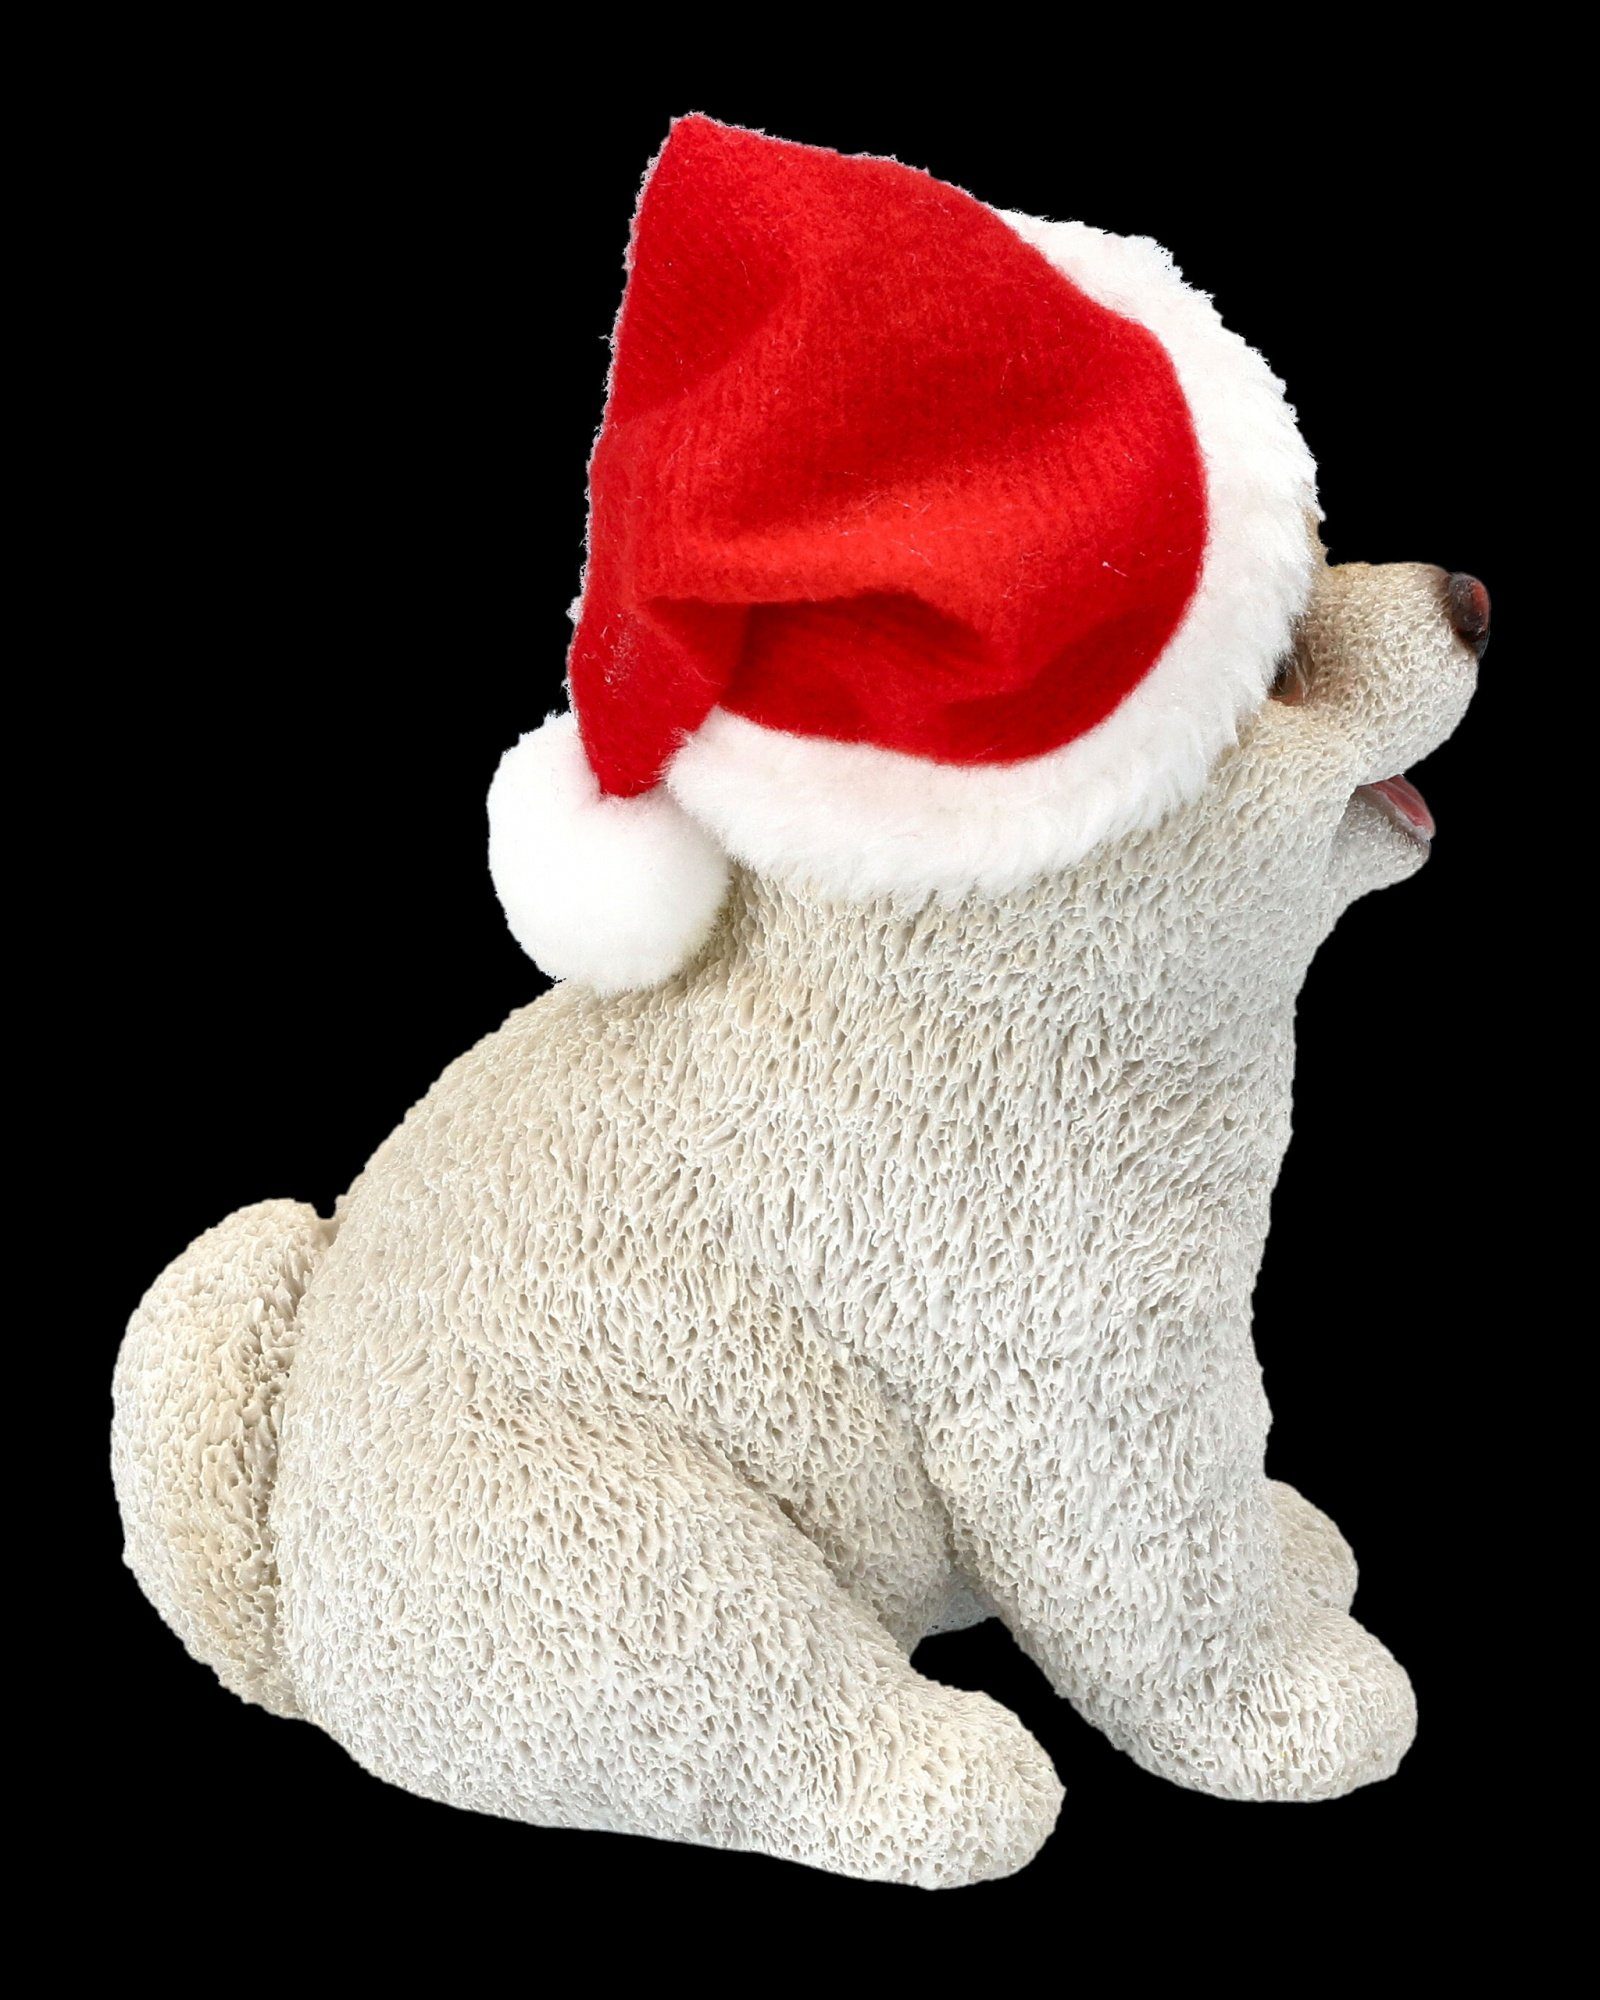 - Weihnachten Christmas Hunde Figuren Tier Deko Tierfigur GmbH - Boo Figur Shop